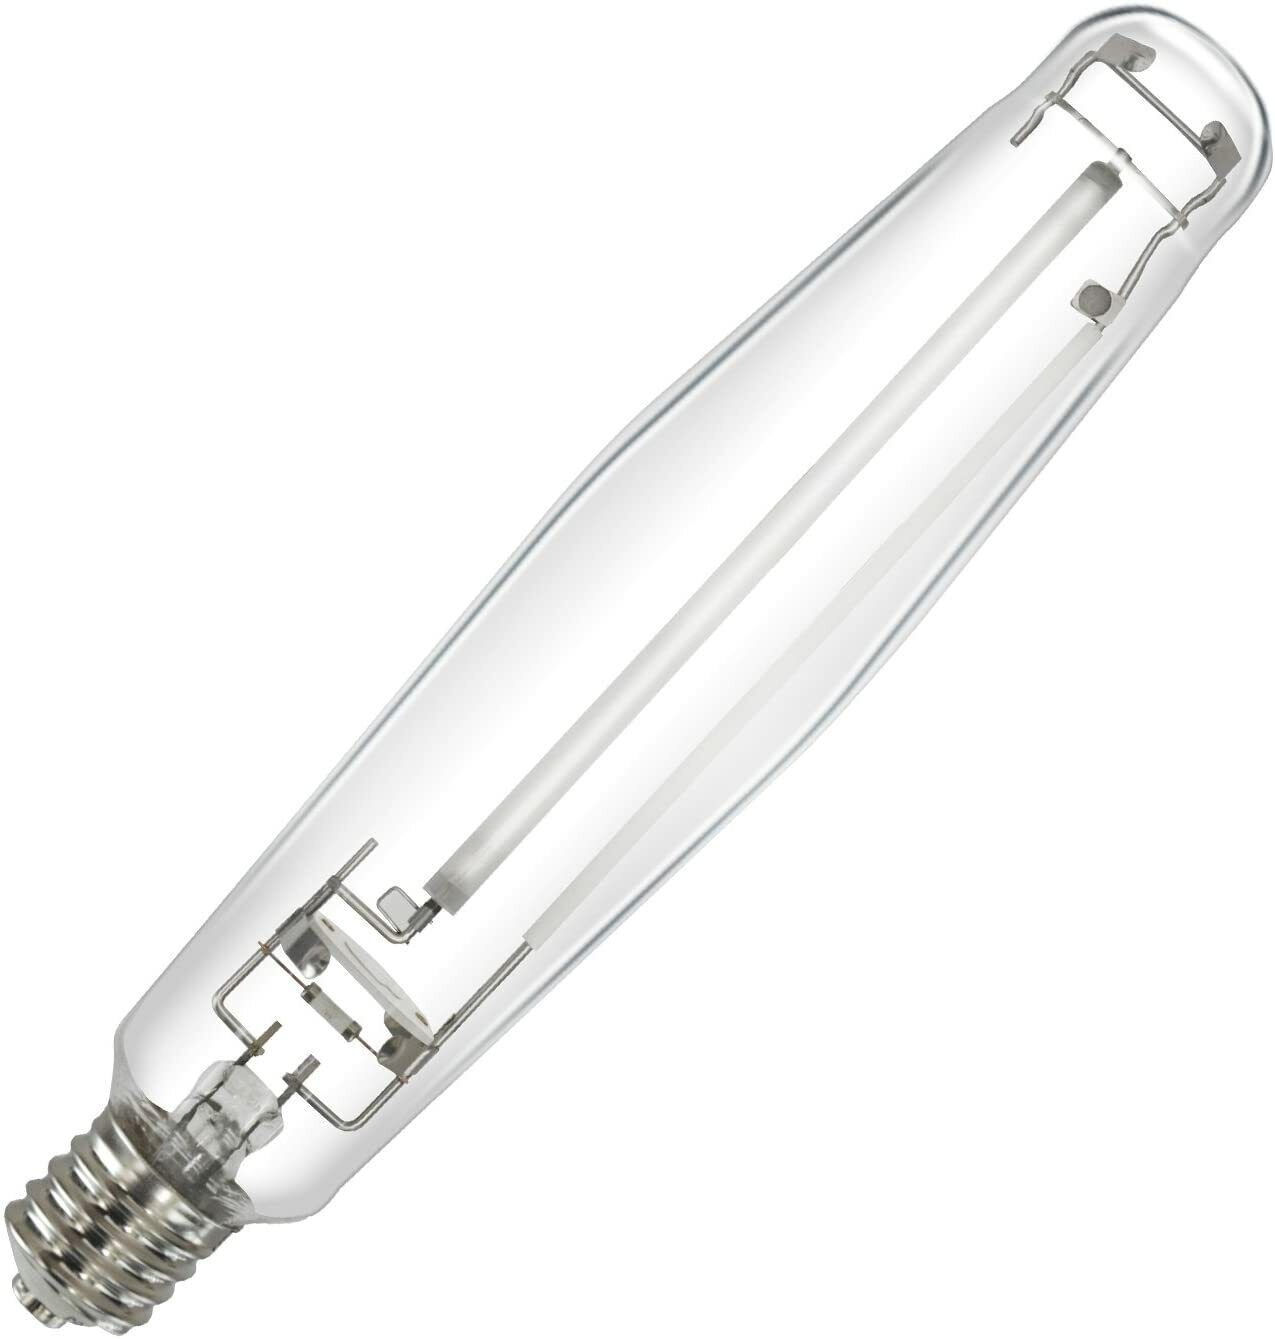 iPower 1000 Watt High Pressure Sodium HPS Grow Light Bulb Lamp 1/2/4/6-PACK